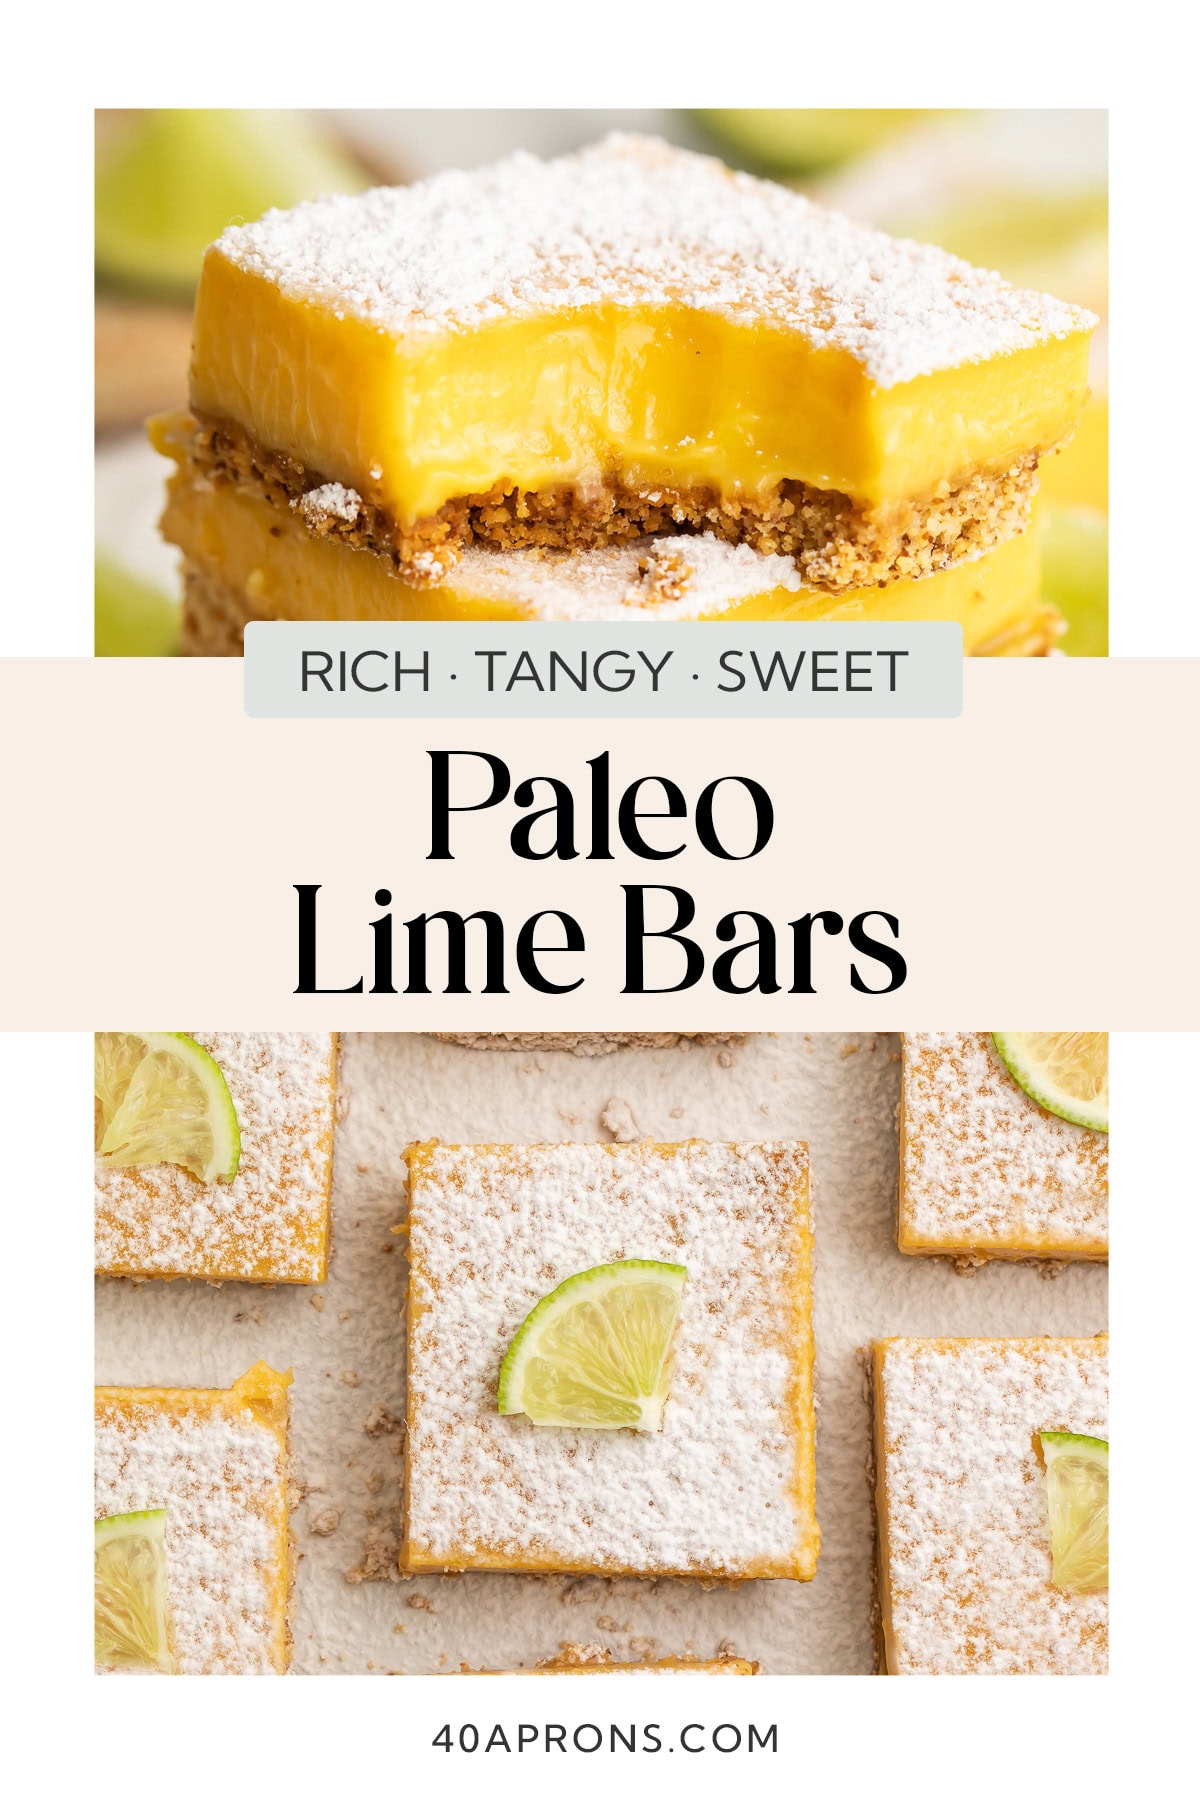 Pin for paleo lime bars.